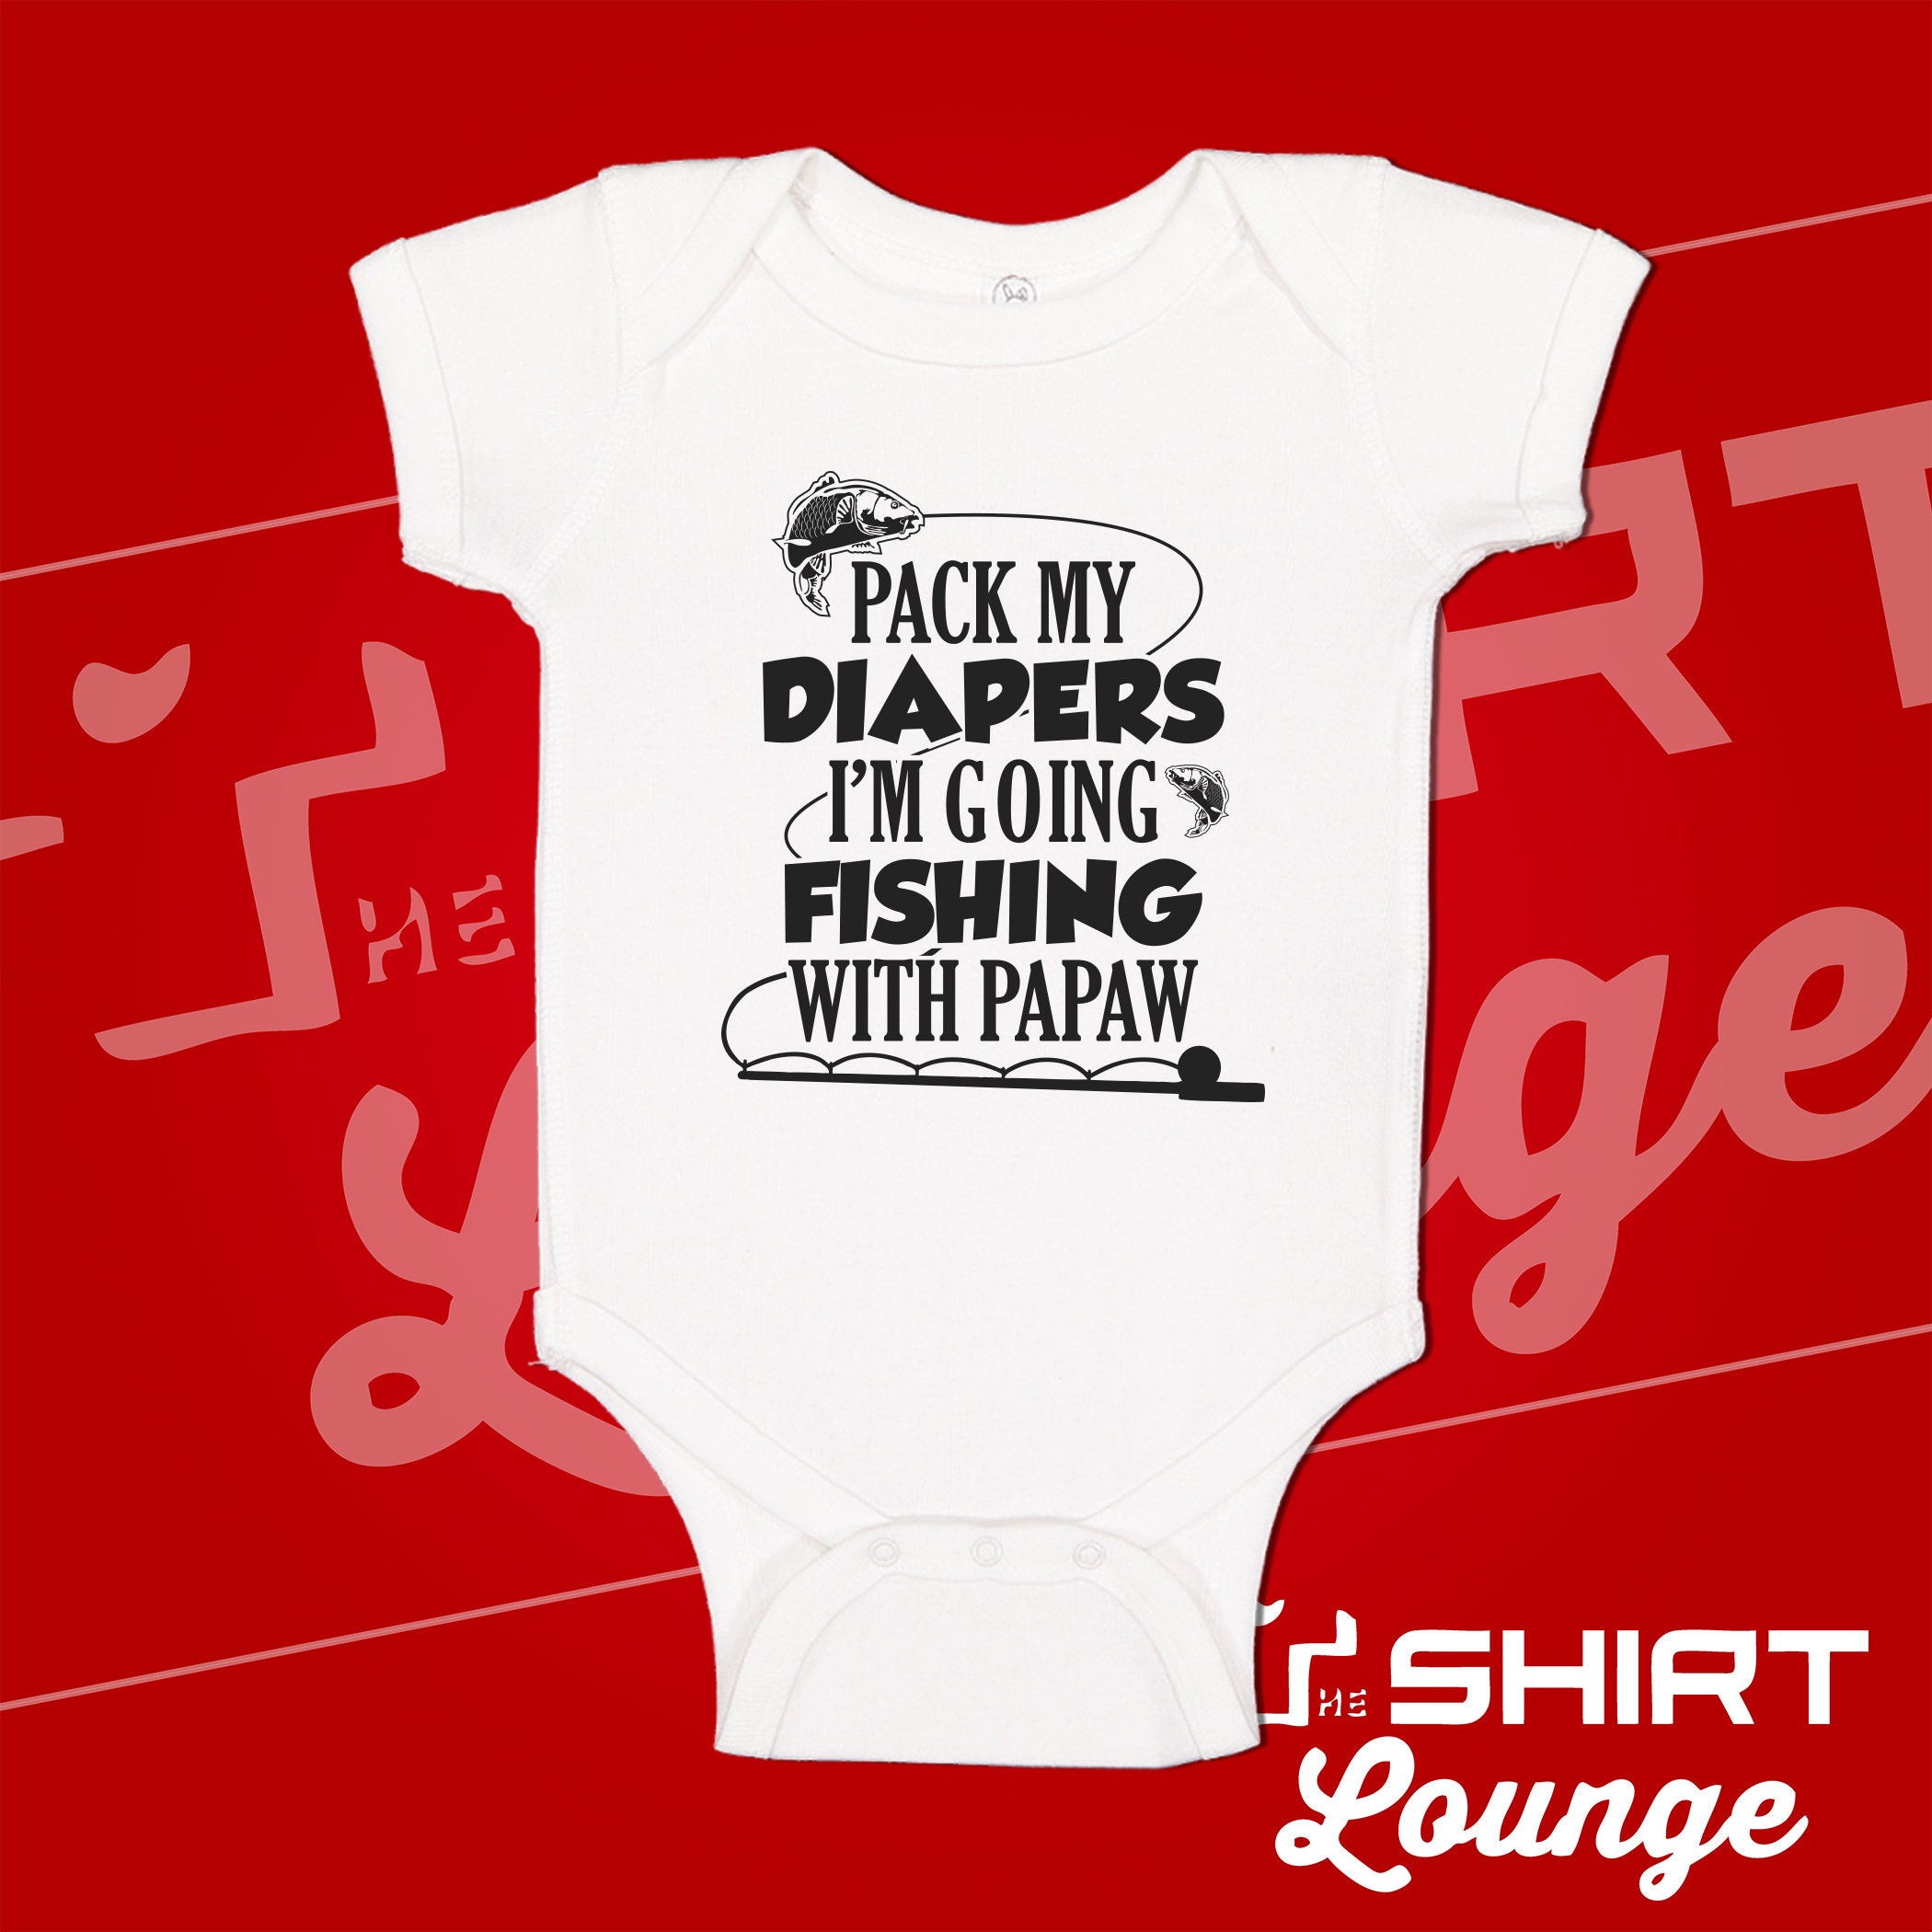 I'm Going Fishing With My Papaw Baby Bodysuit One Piece Toddler T-shirt,  Funny Pawpaw Fishing Shirt Gift, Grandson Fishing Present, Papa -   Canada